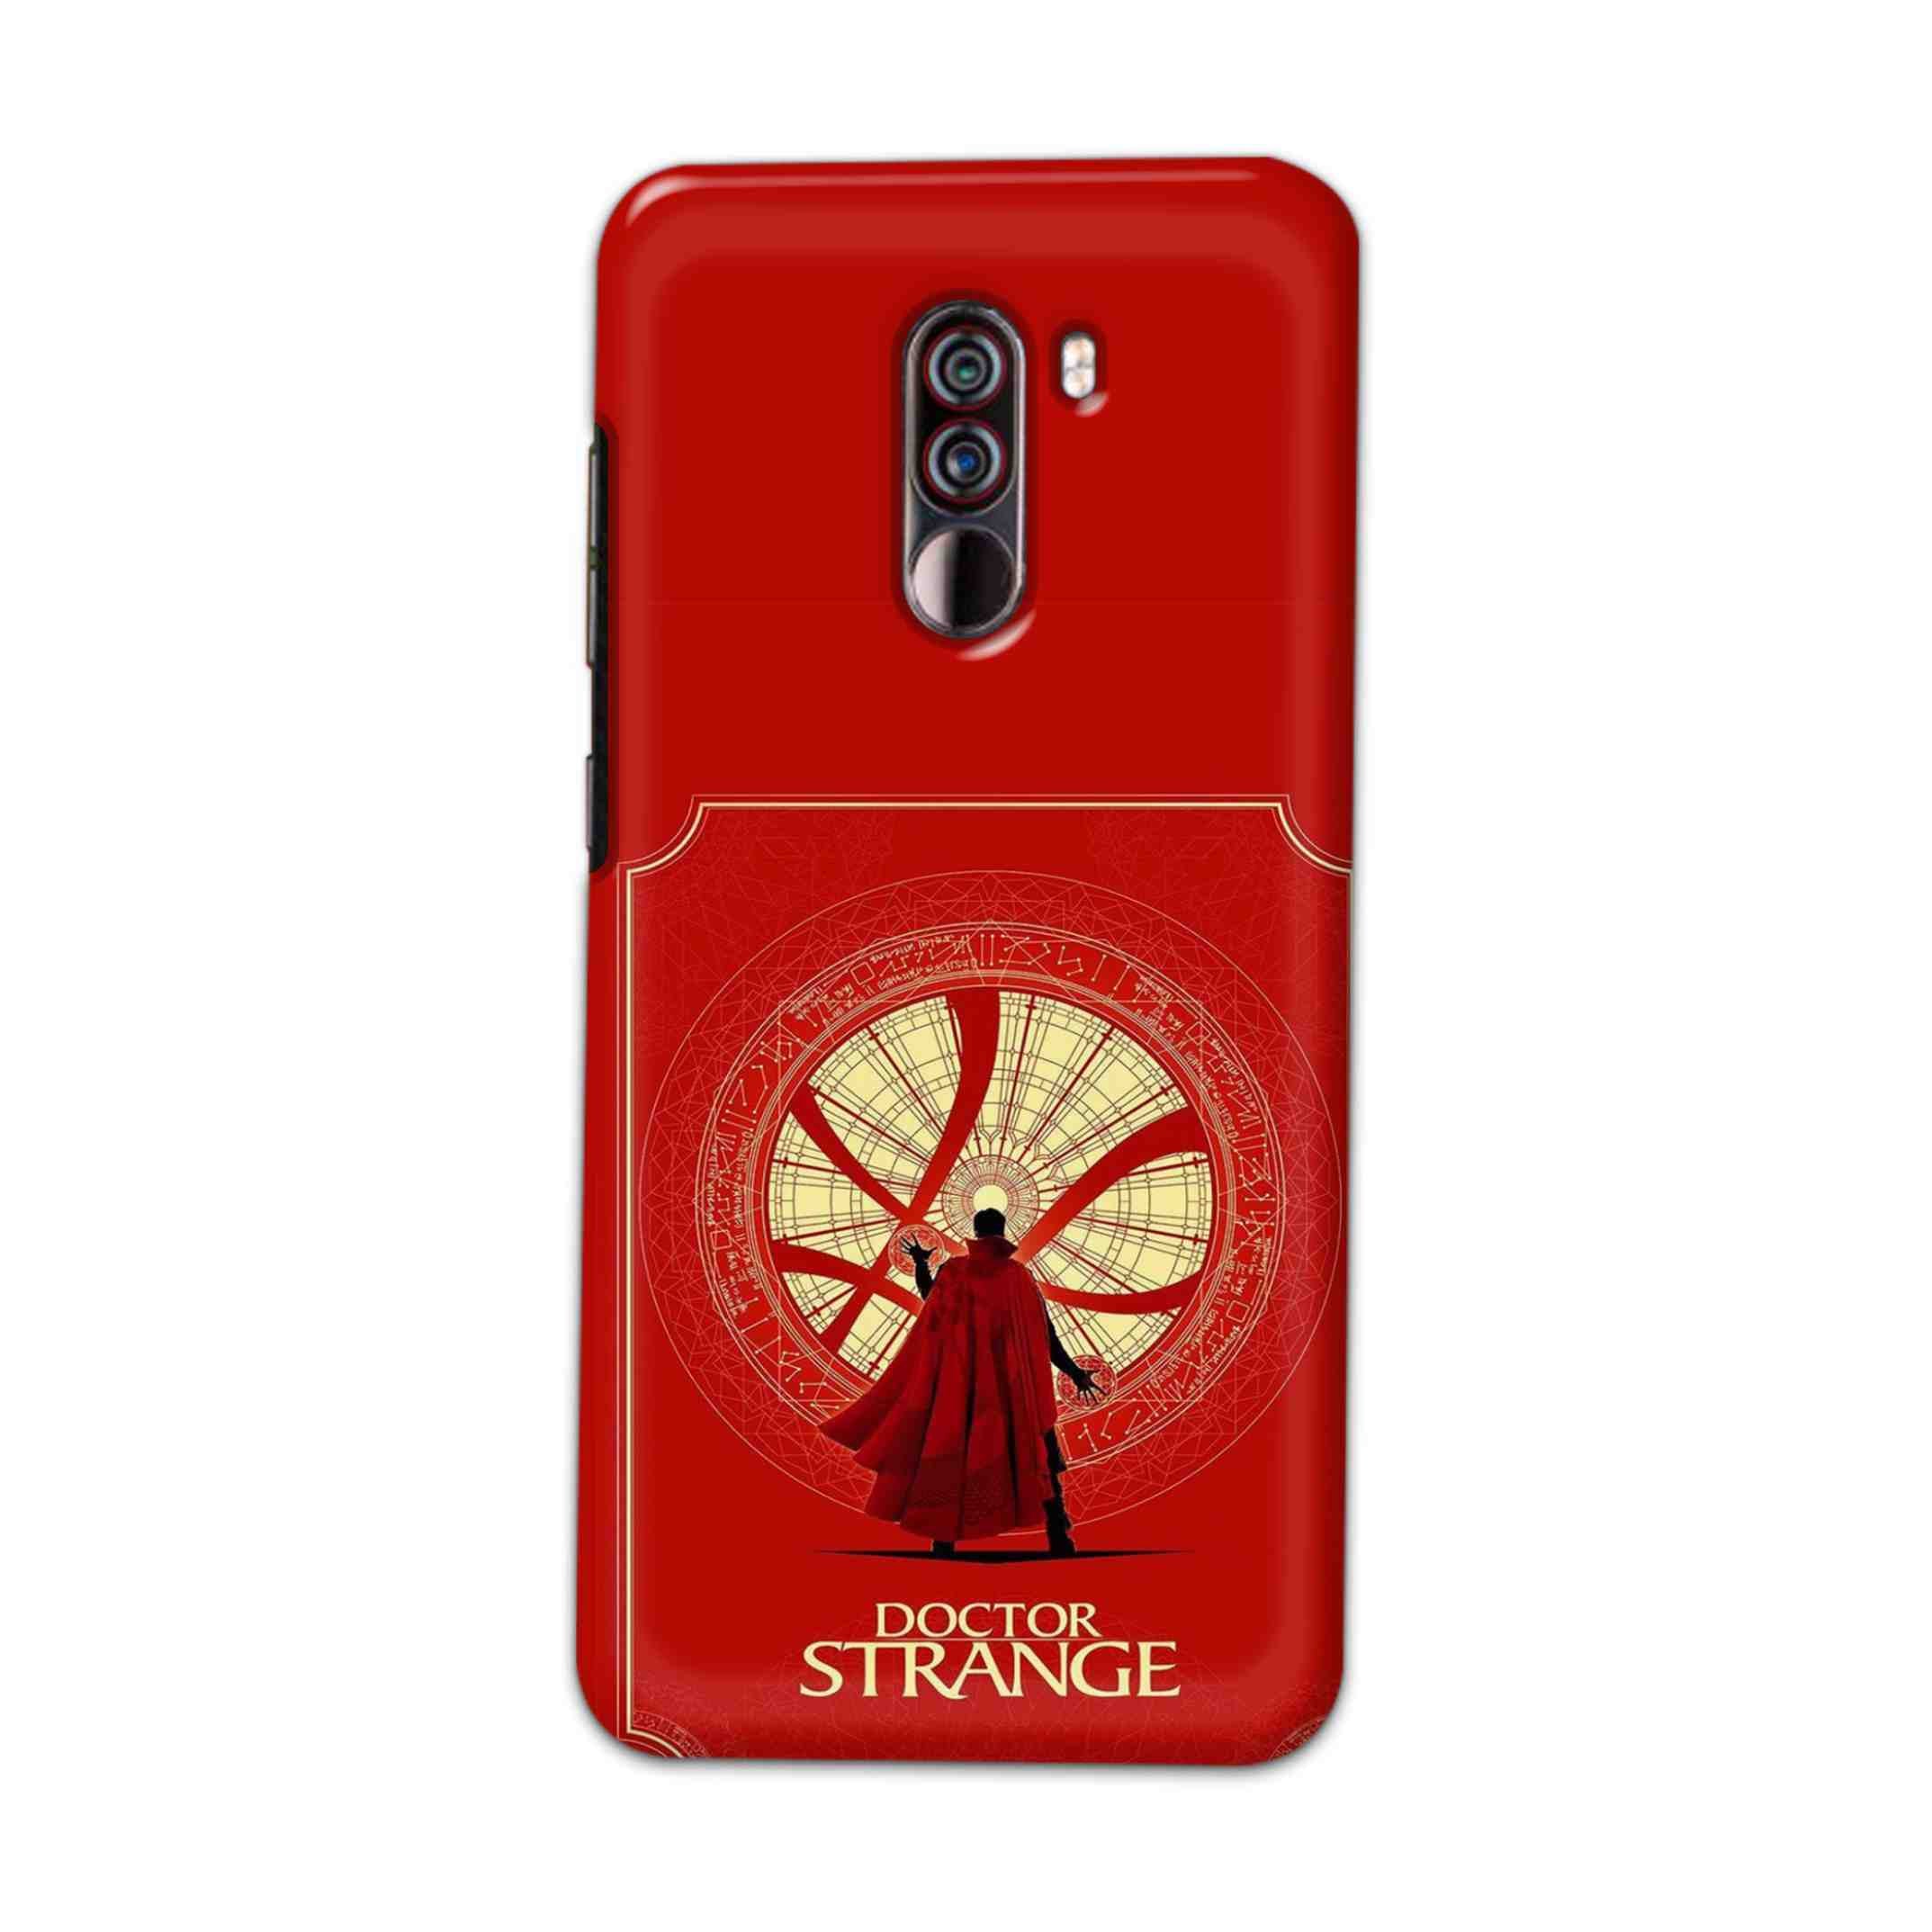 Buy Blood Doctor Strange Hard Back Mobile Phone Case Cover For Xiaomi Pocophone F1 Online